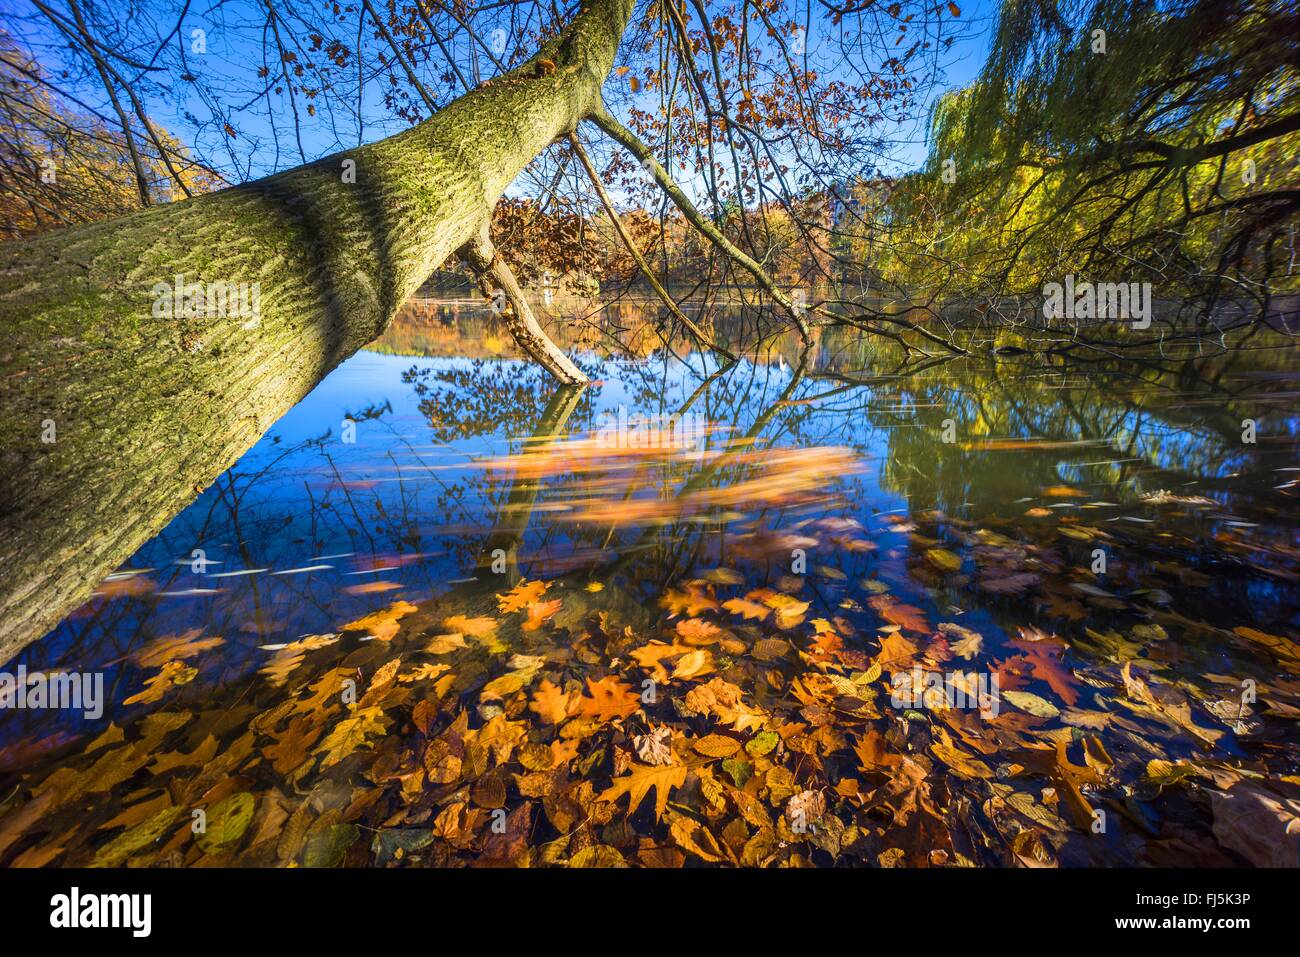 Fallen tree at lake shore with autumn leaves, Germany, Saxony, Jocketa, Talsperre Poehl Stock Photo